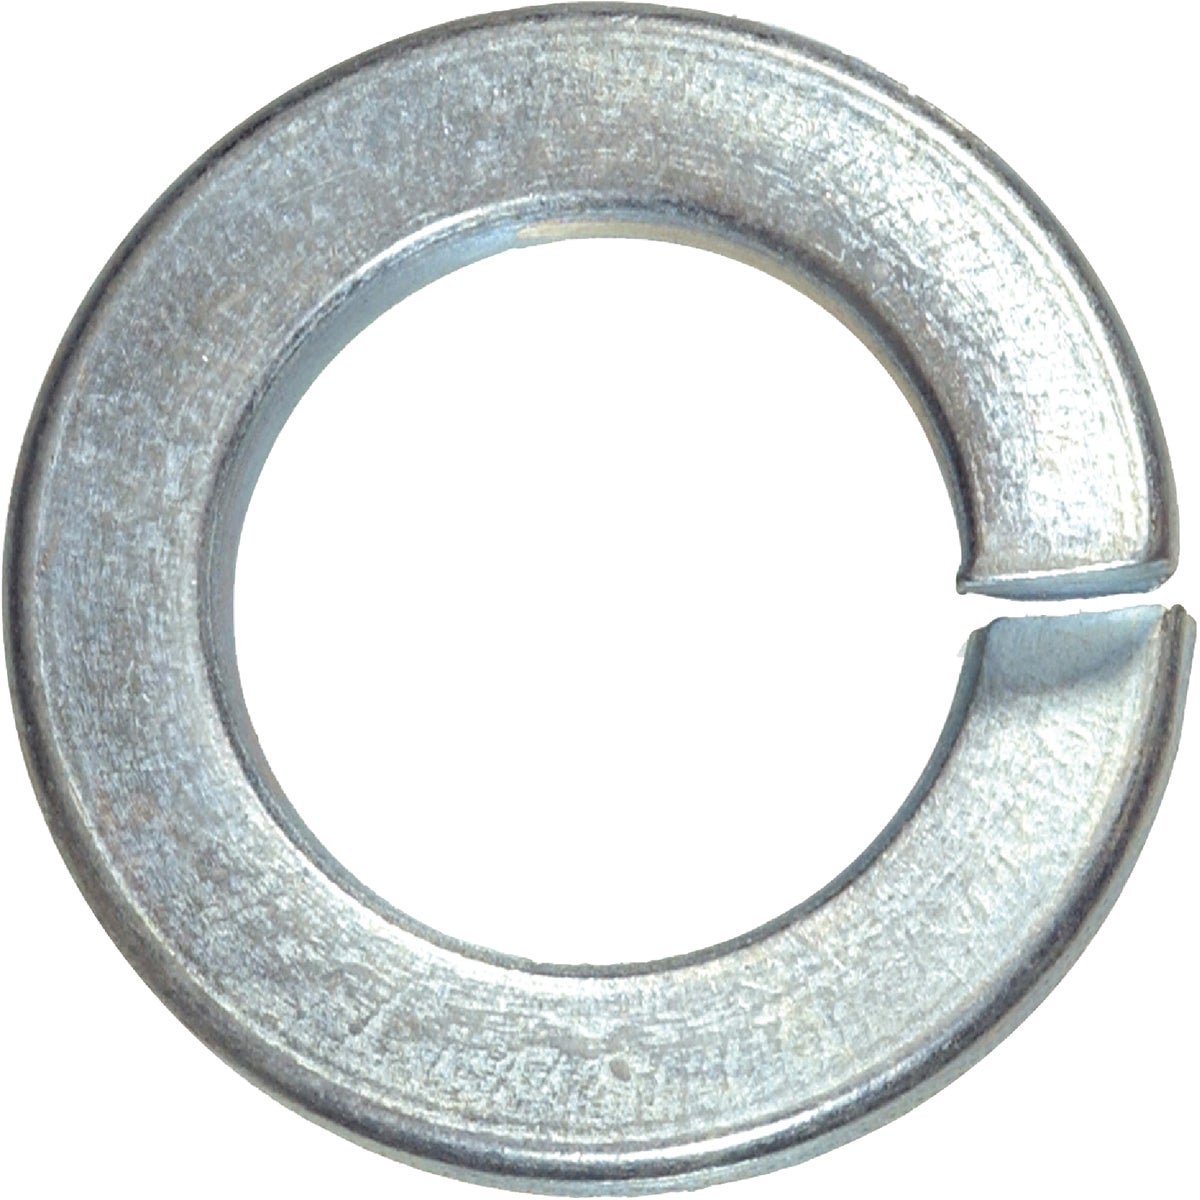 HILLMAN 6612 Hillman 3/8 In. Steel Zinc Plated Lock Washer (8 Ct.) 6612